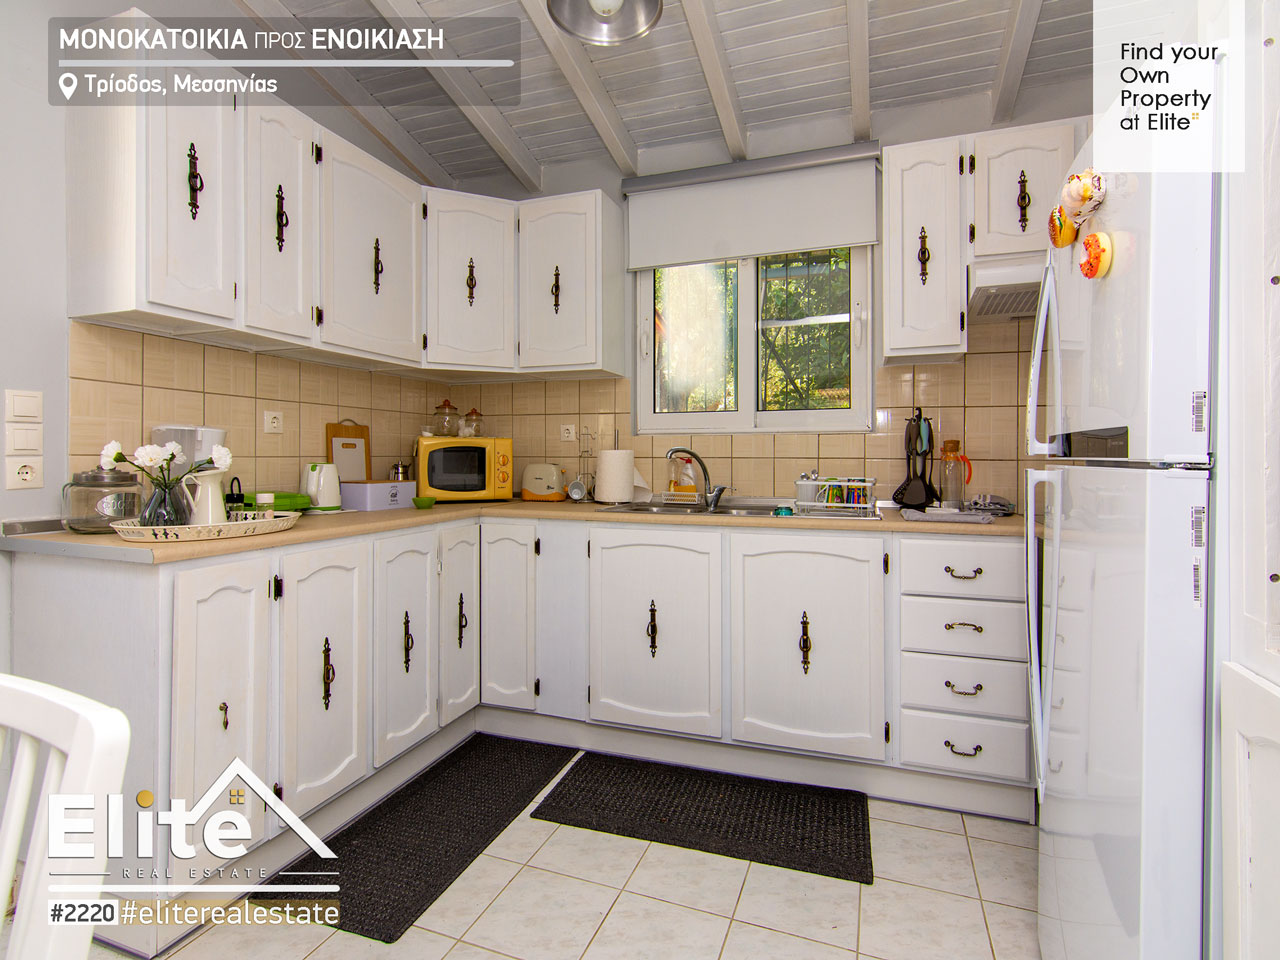 In affitto, casa indipendente Triodos Messinia #2220 | ELITE REAL ESTATE